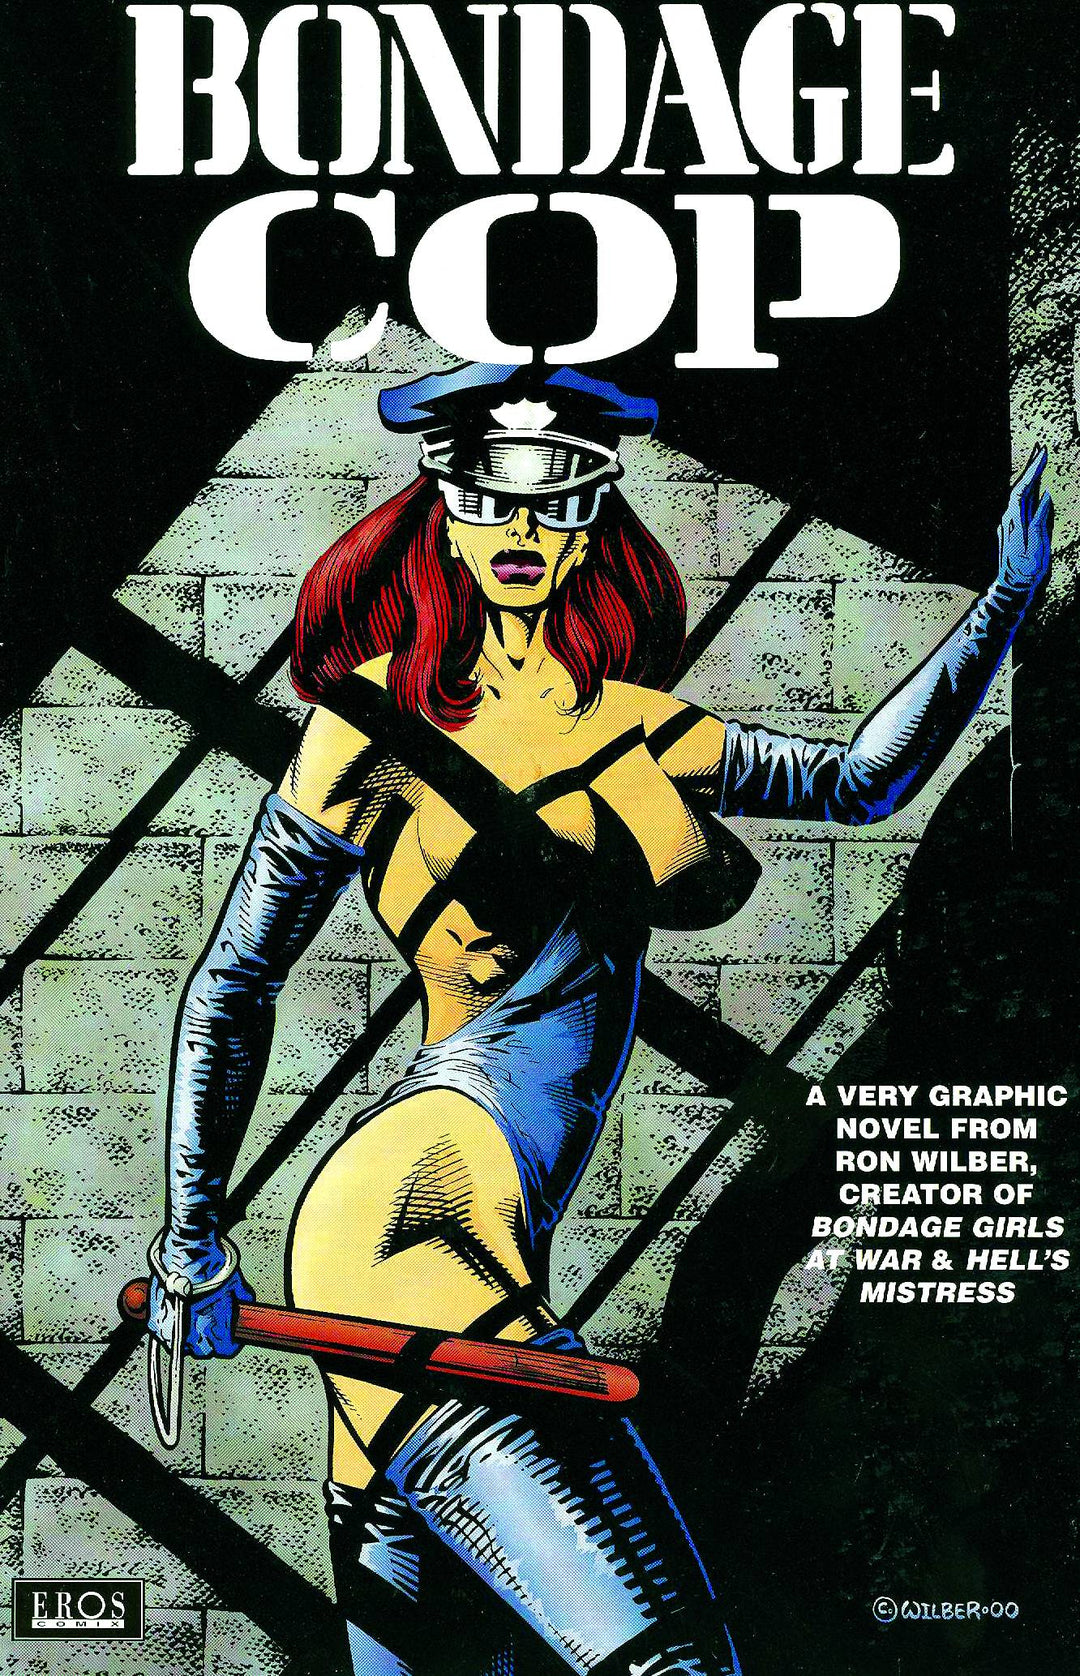 Bondage Cop Graphic Novel (Adult)